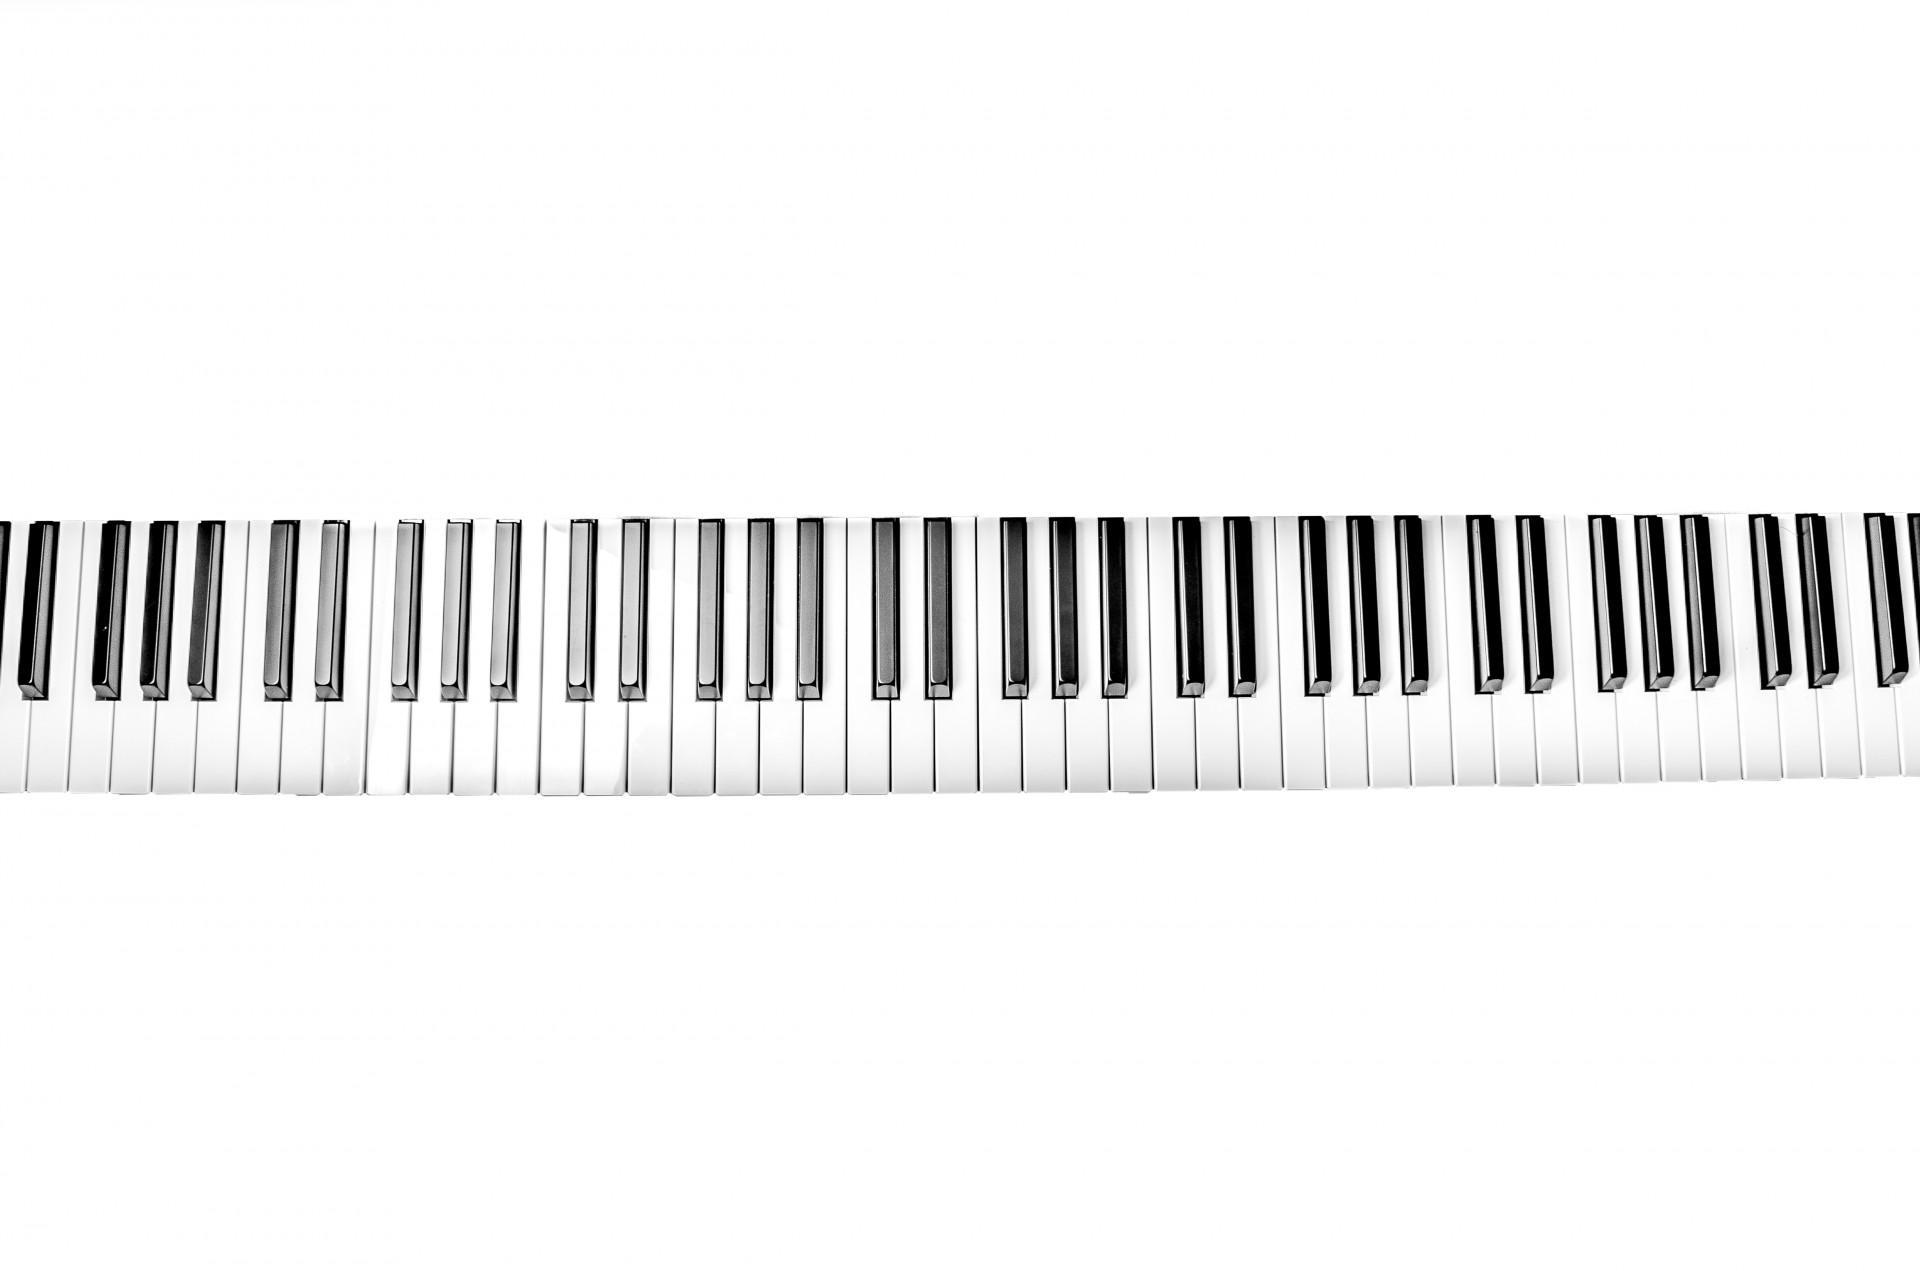 Фортепиано белые клавиши. Клавиатура пианино. Клавиатура рояля. Клавиатура рояля на прозрачном фоне. Клавиши рояля.